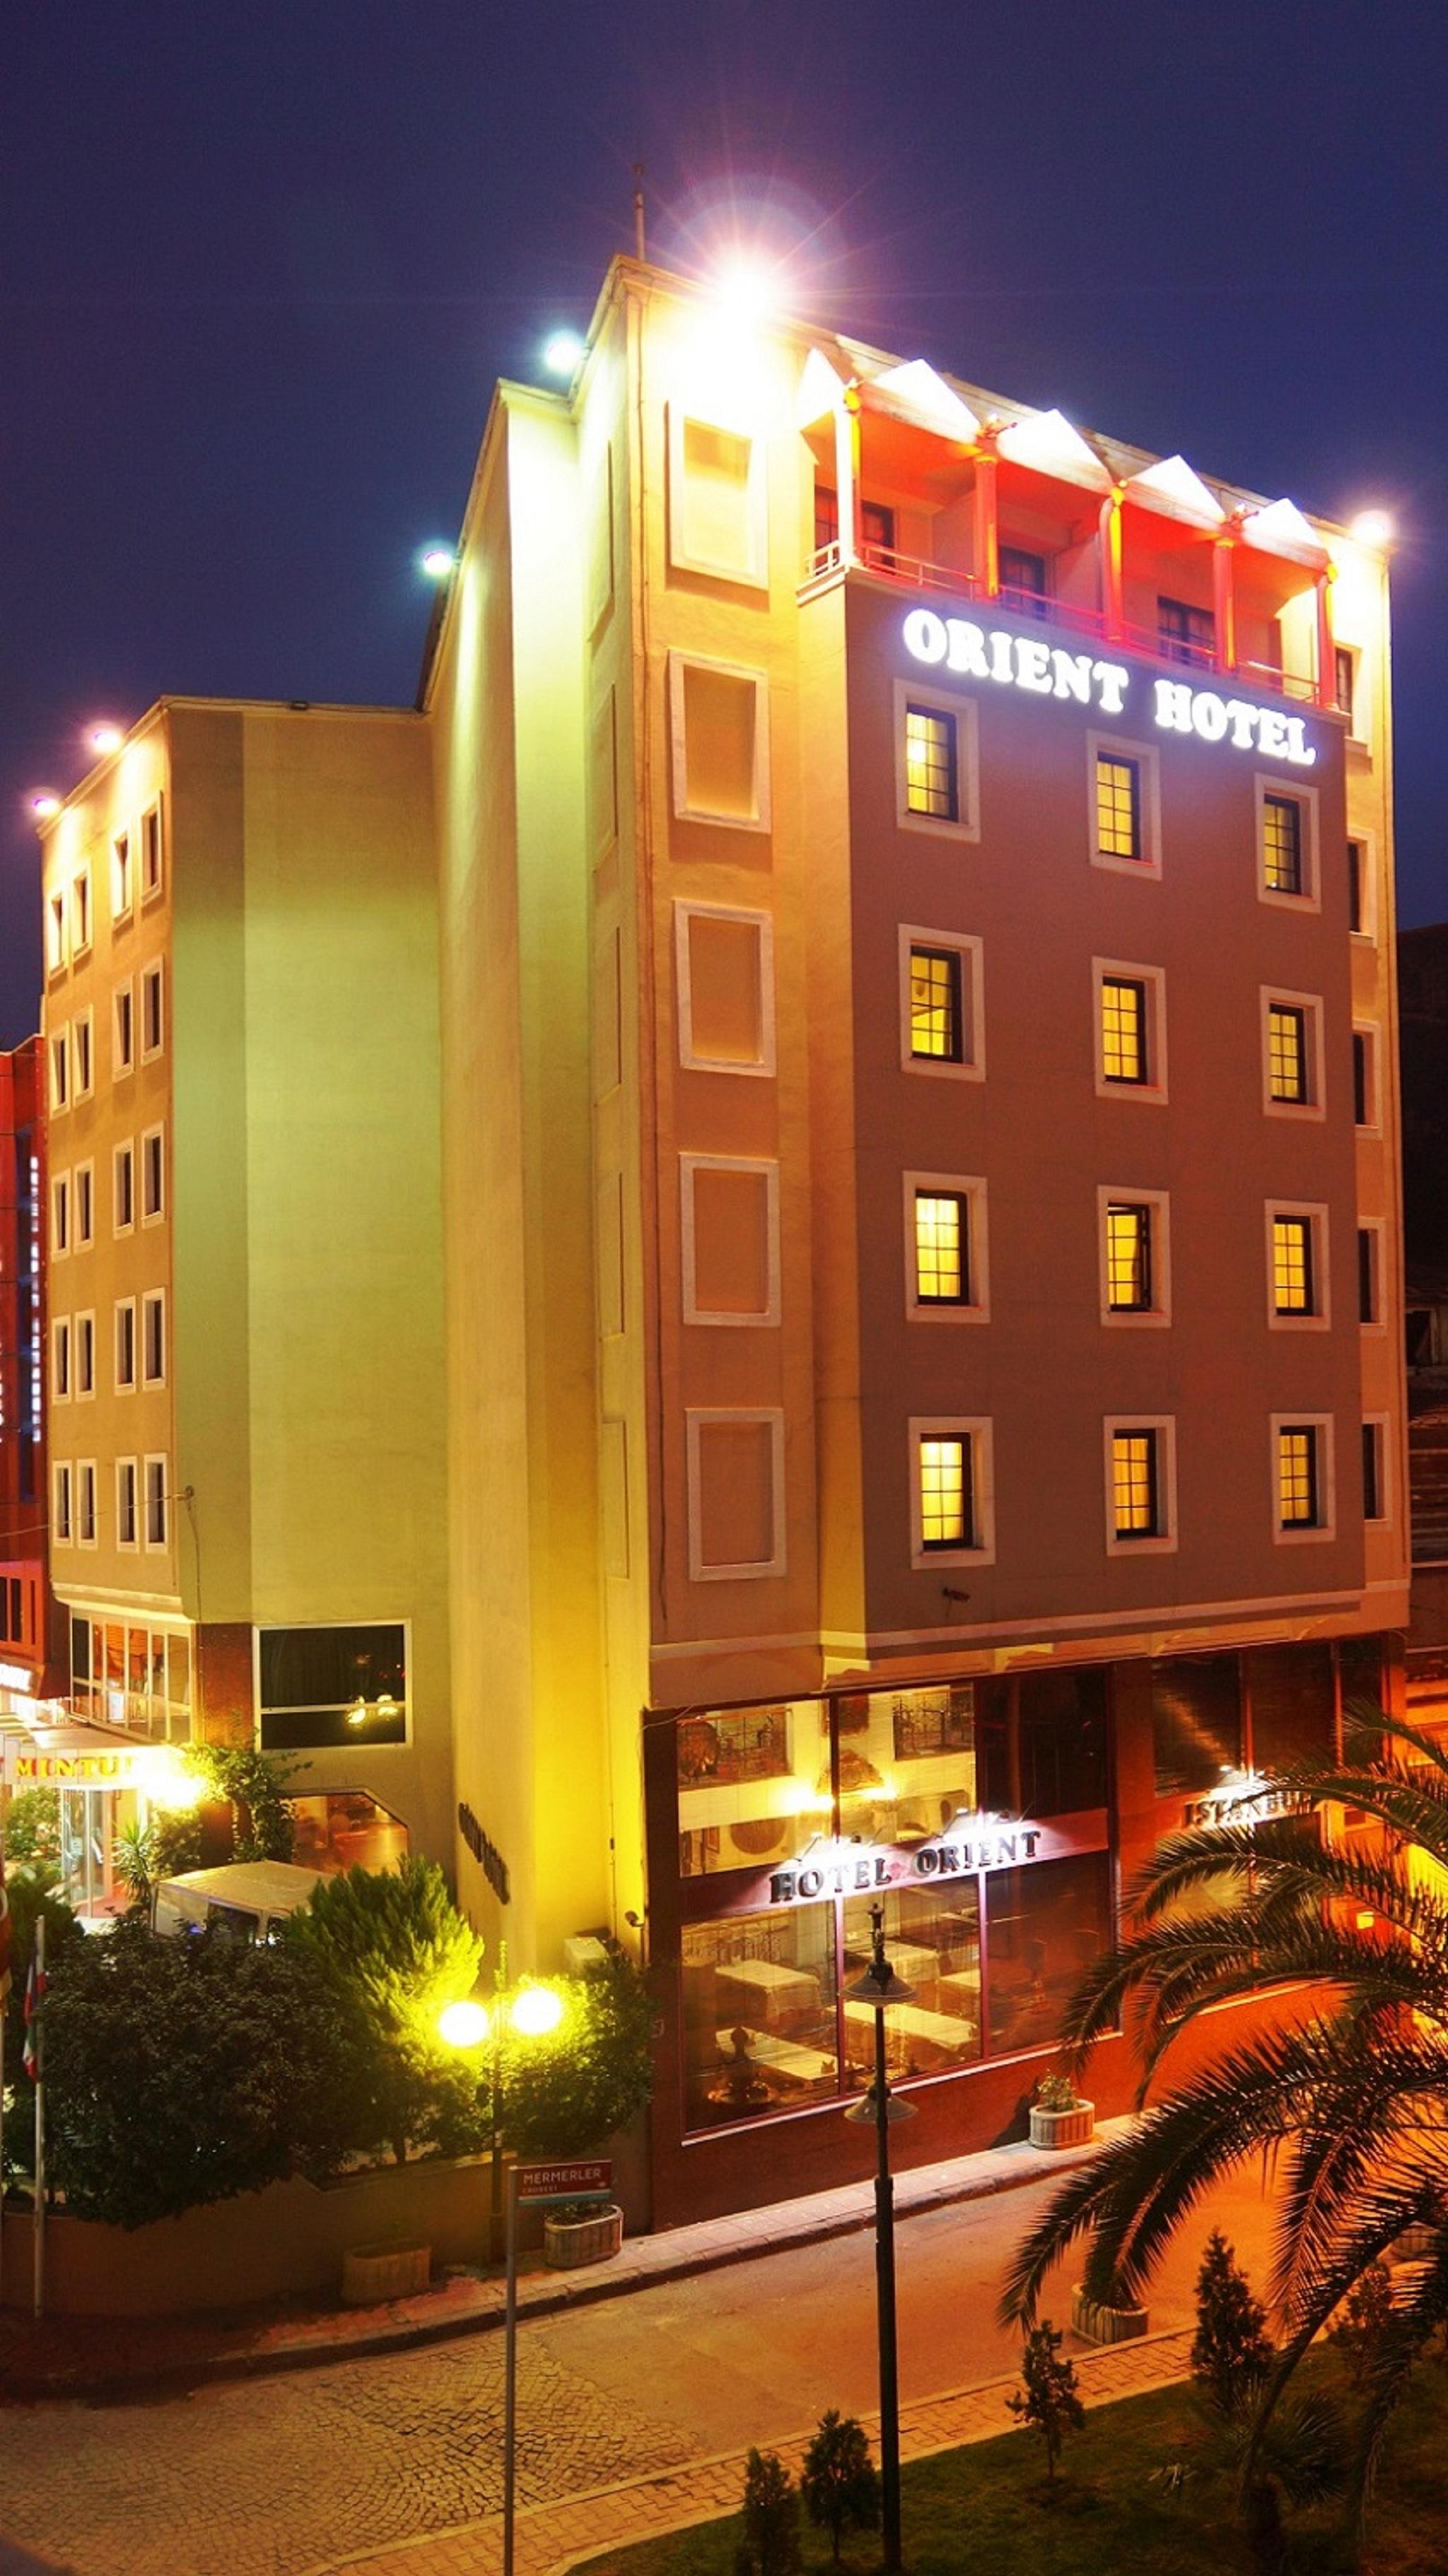 Orient Mintur Hotel